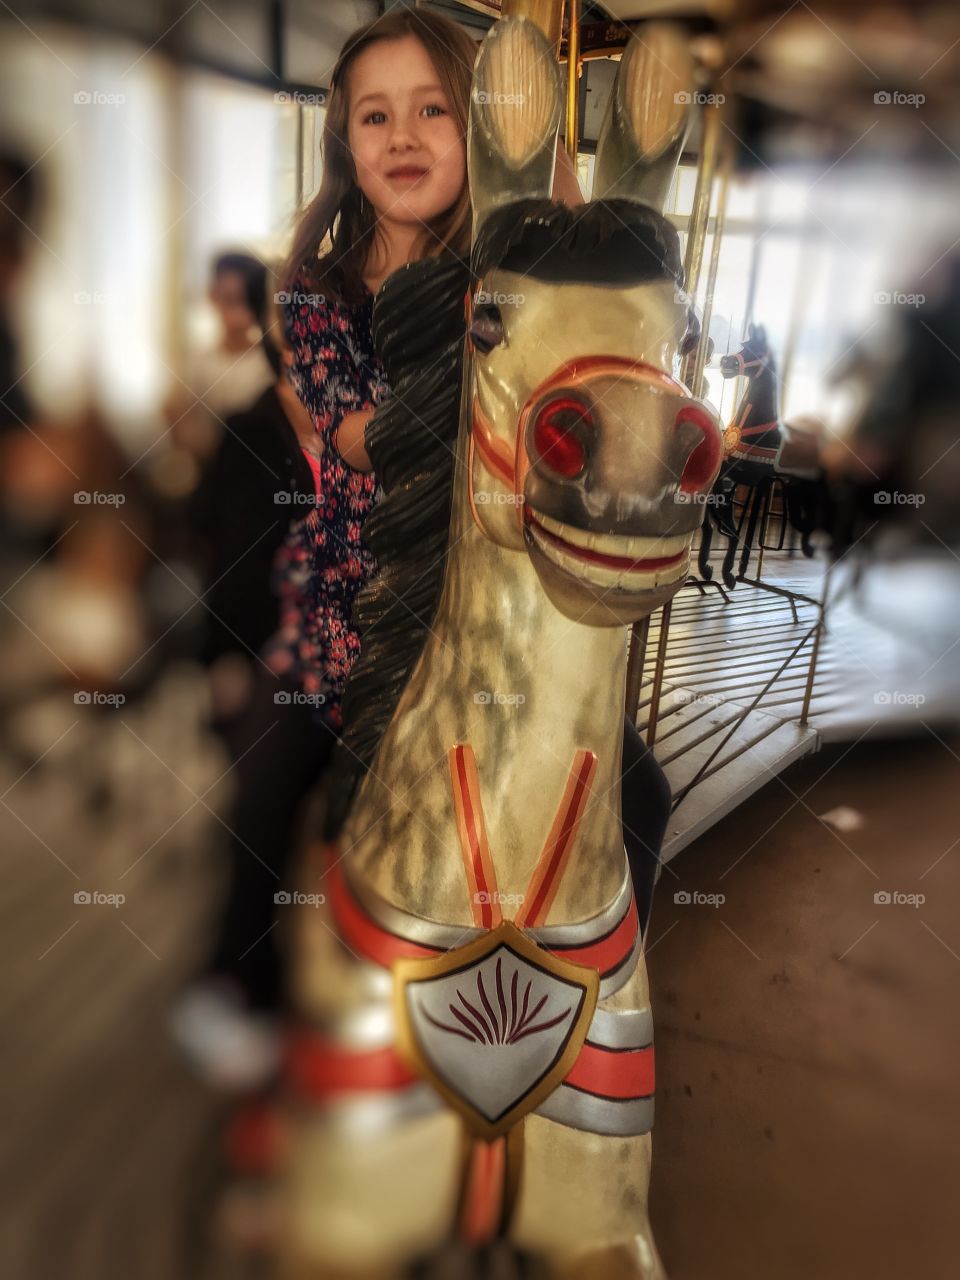 Small girl enjoying carousel horse ride